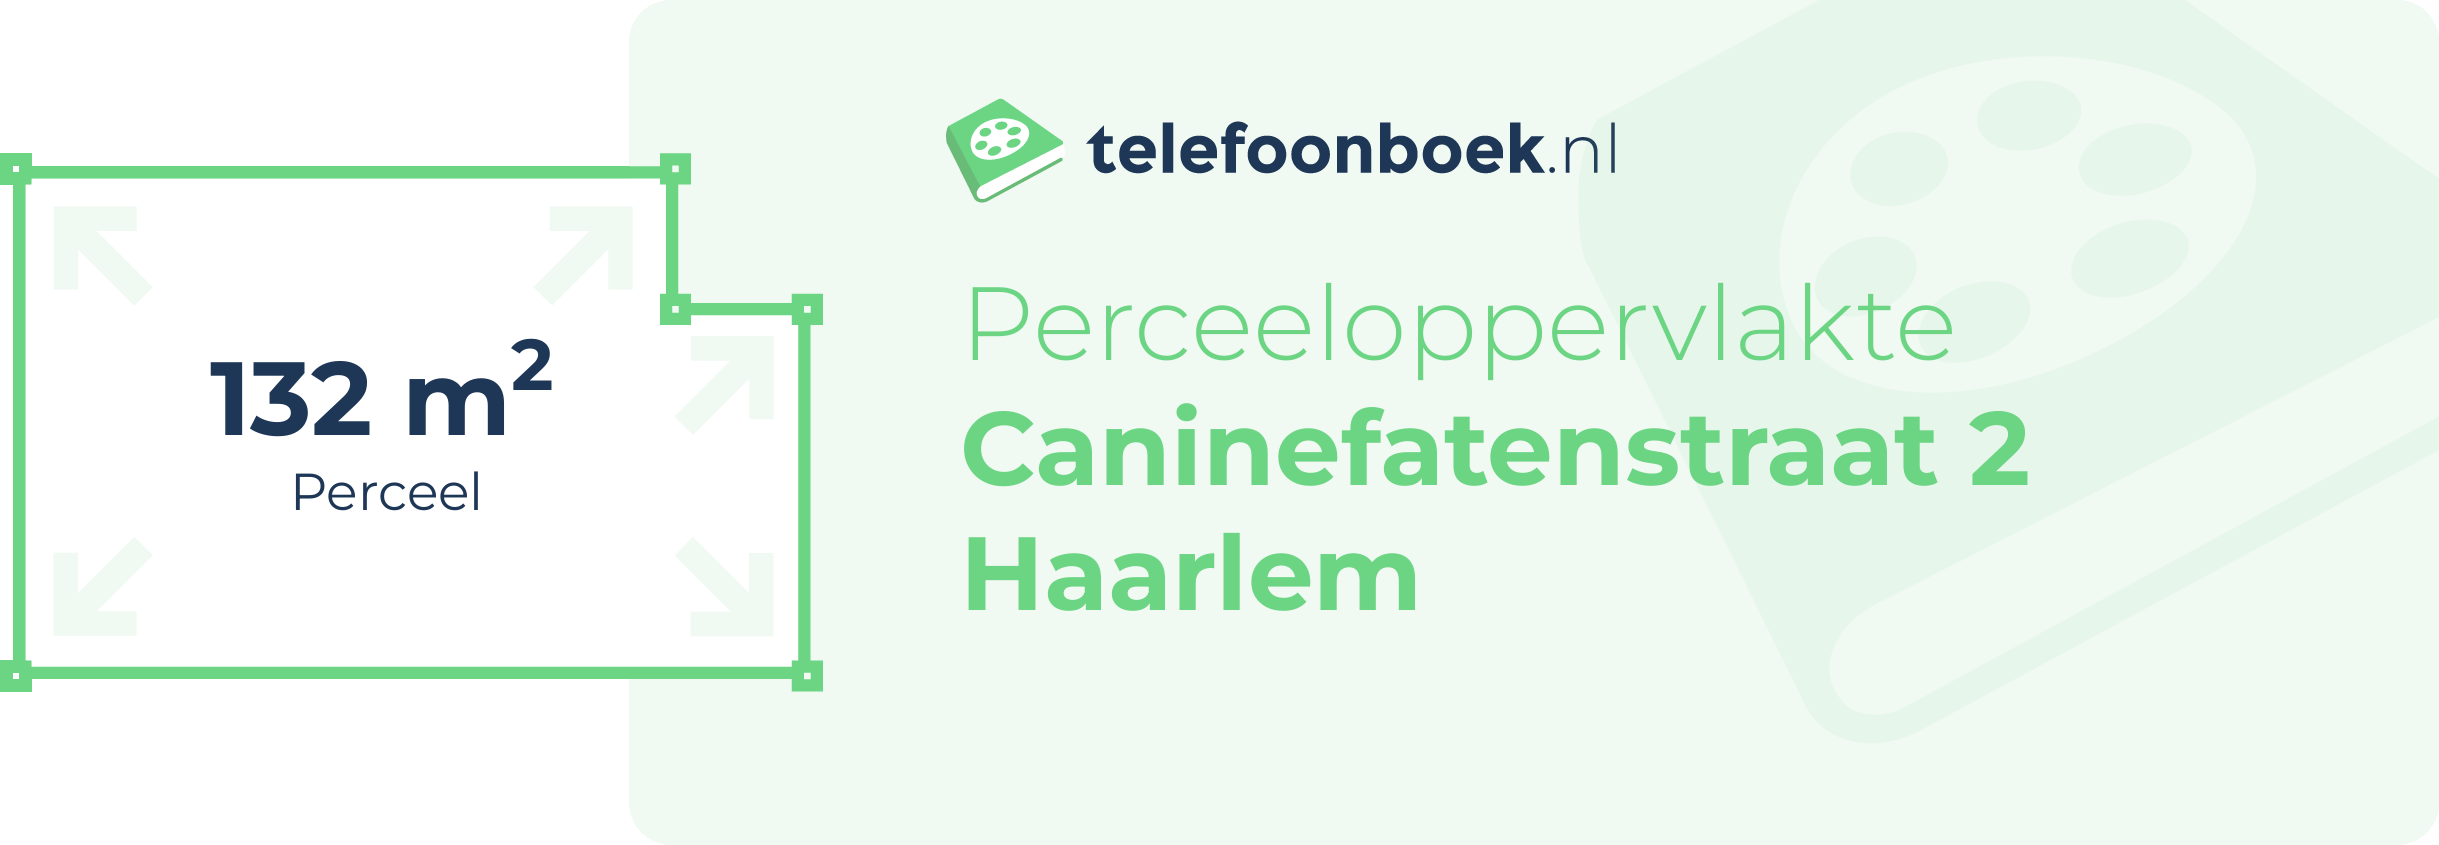 Perceeloppervlakte Caninefatenstraat 2 Haarlem